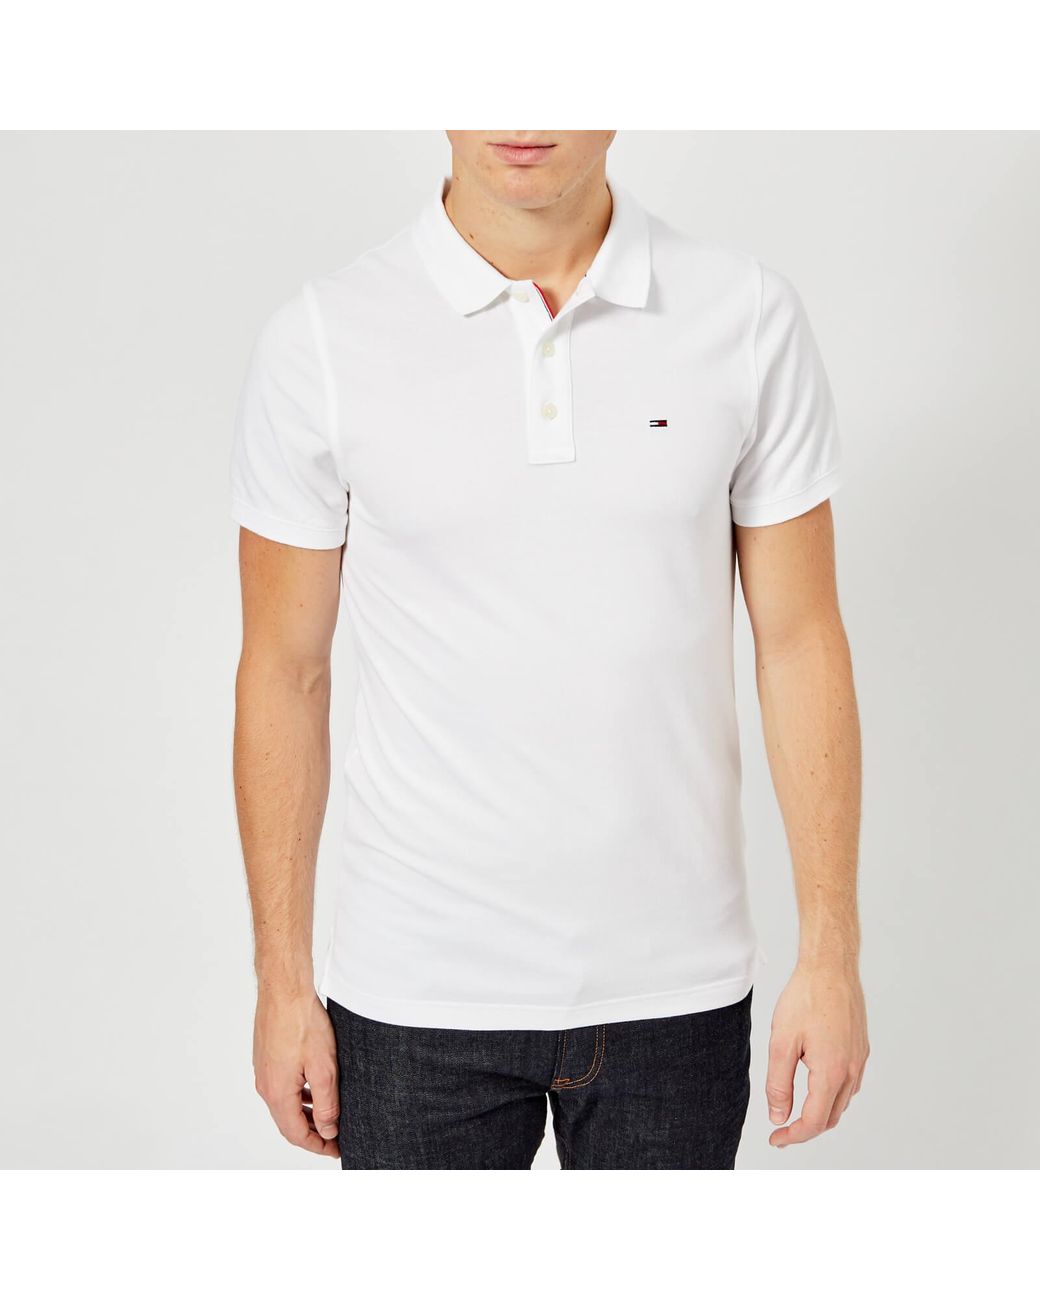 Tommy Hilfiger Denim Original Fine Pique Polo Shirt in White for Men - Lyst